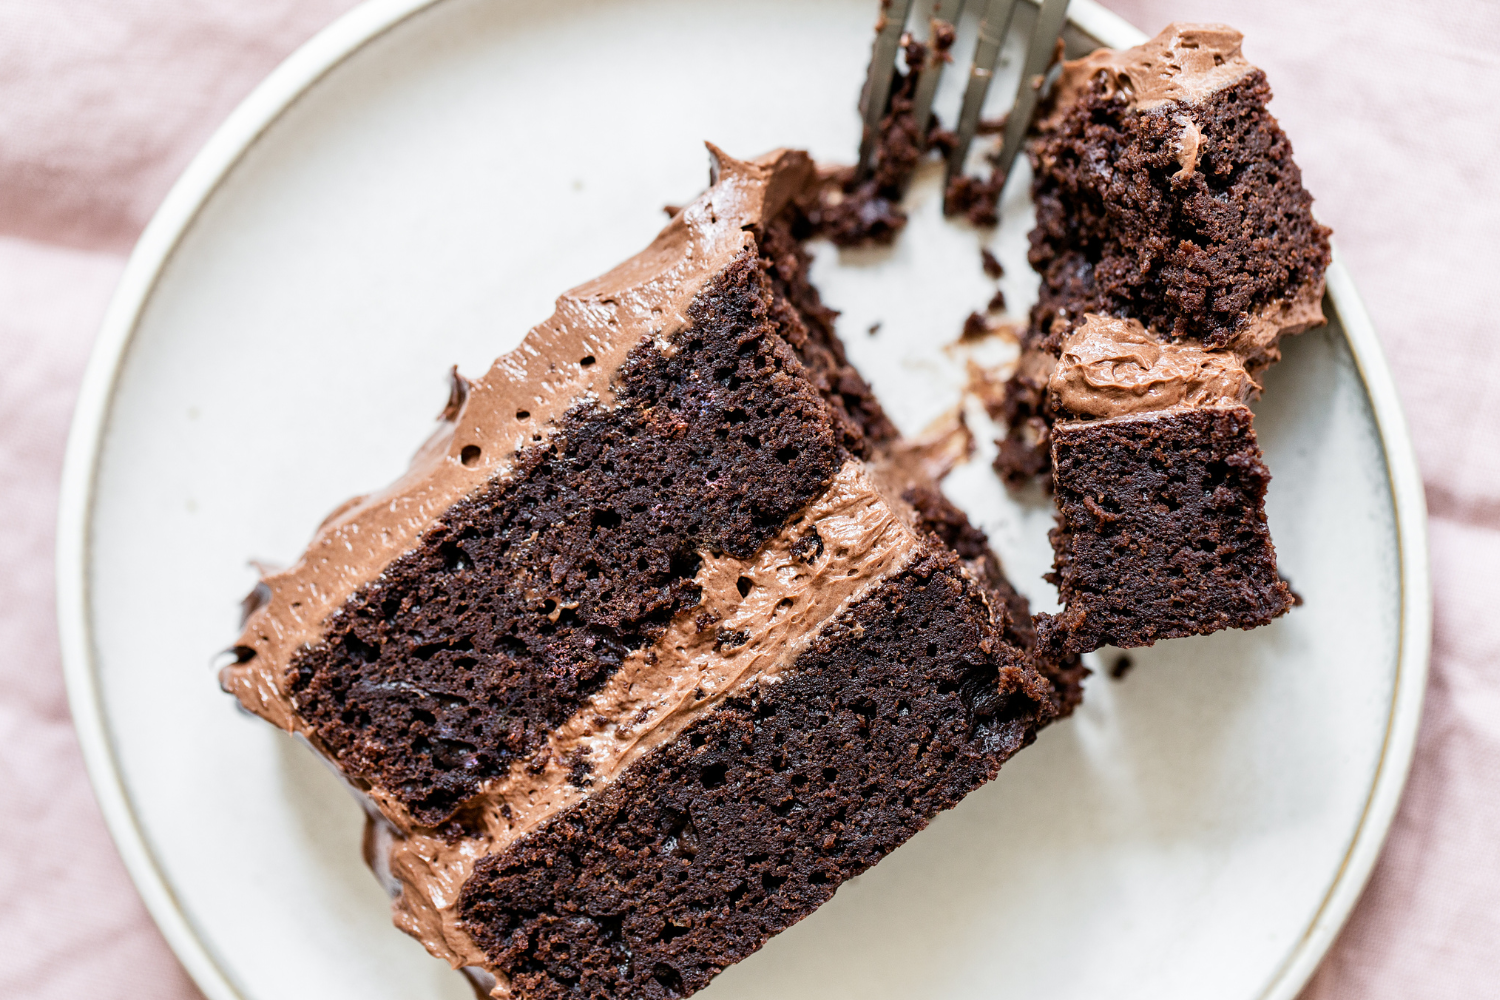 a slice of rich, moist chocolate cake